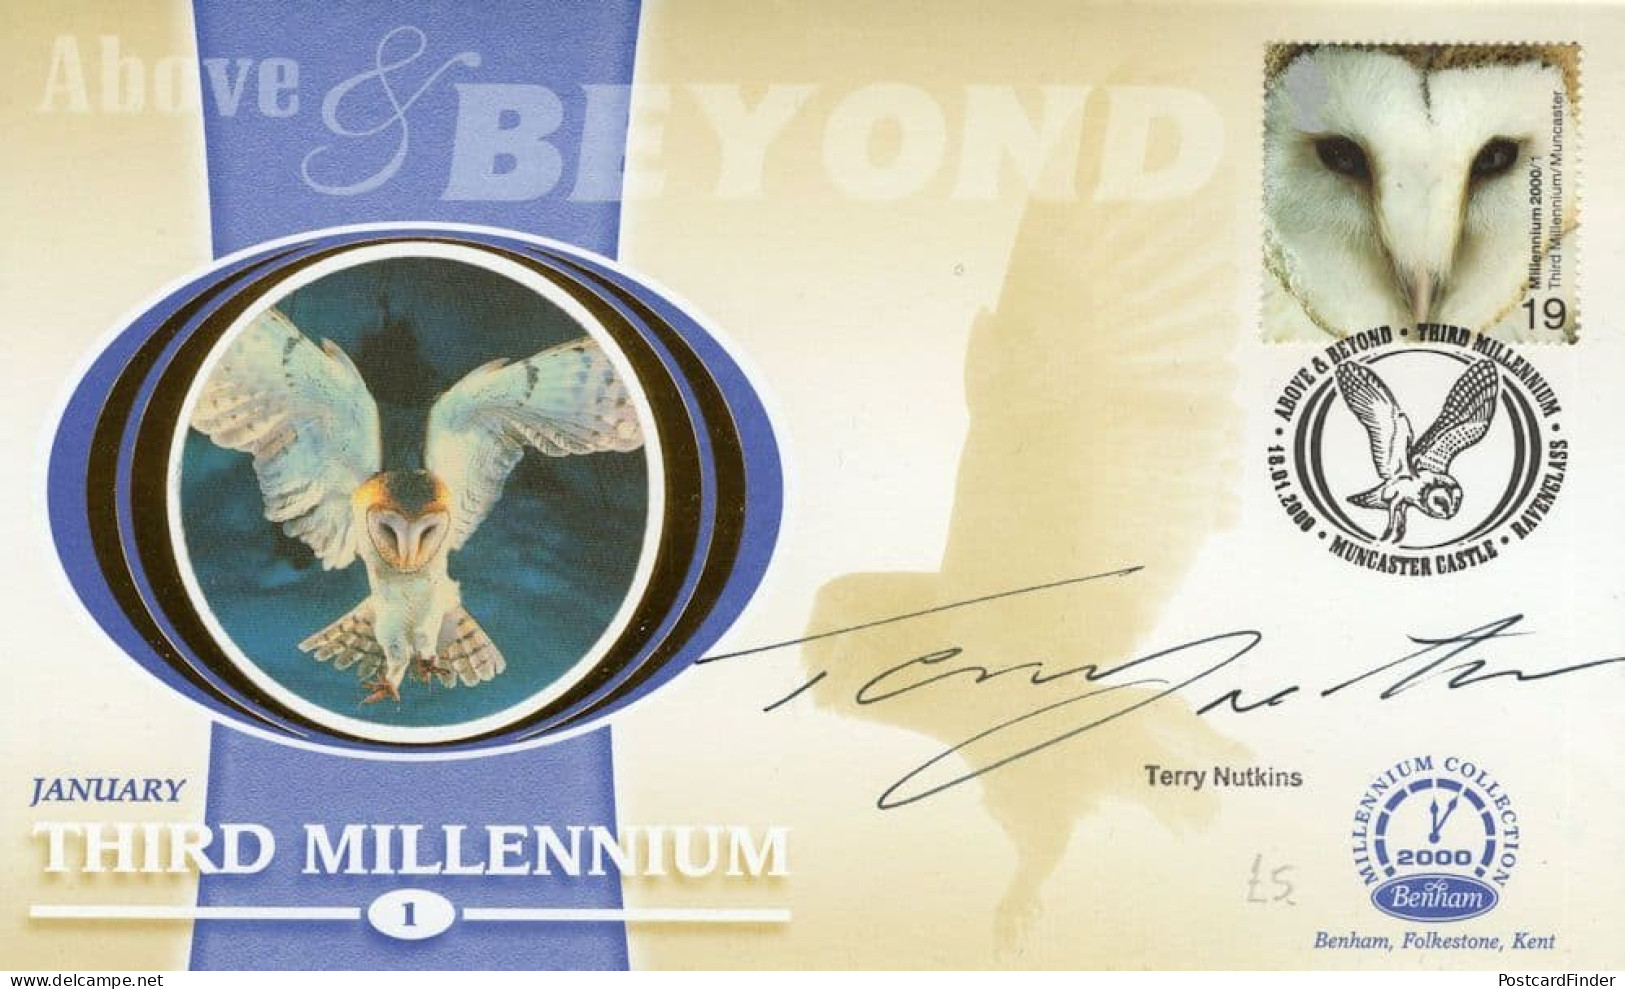 Terry Nutkins Animal Magic TV Show Presenter Owl Hand Signed FDC - Militaria